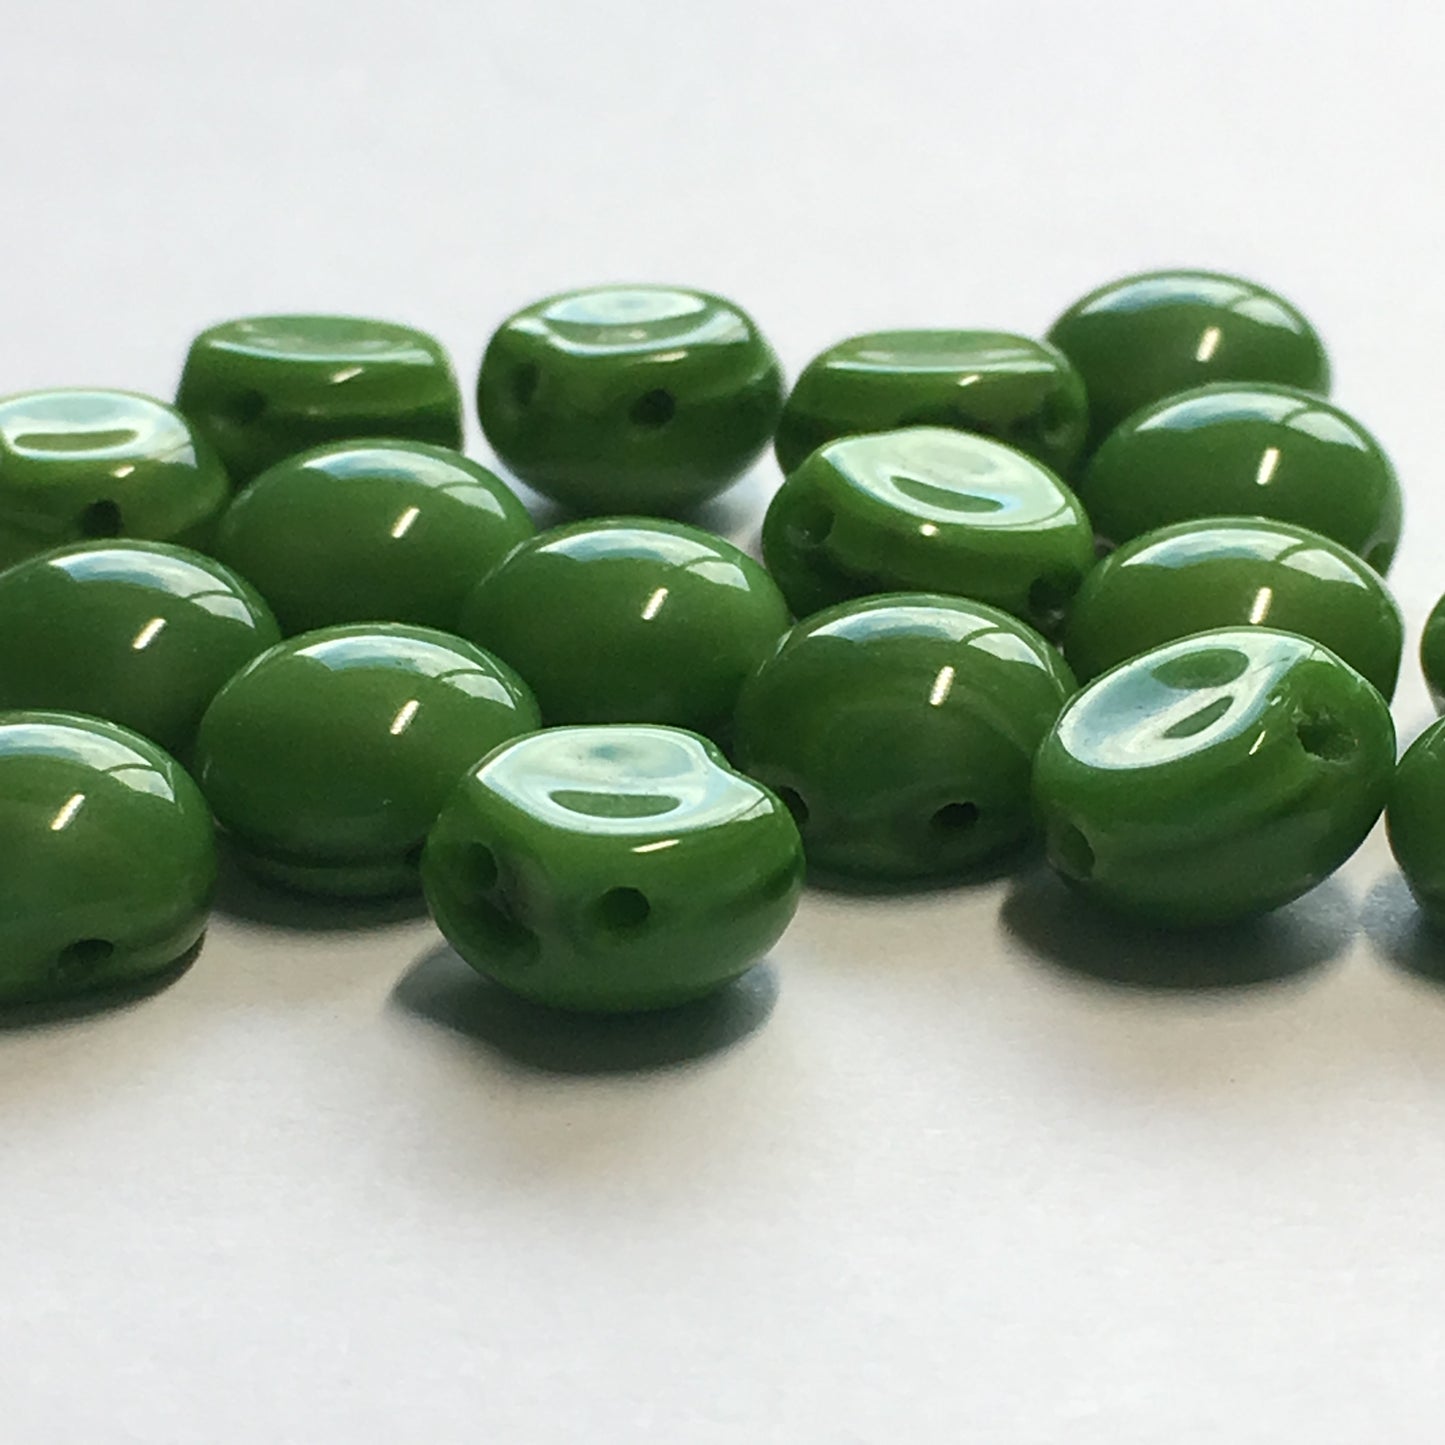 Czech Candy 8 mm Green Beads - 19 or 20 Beads